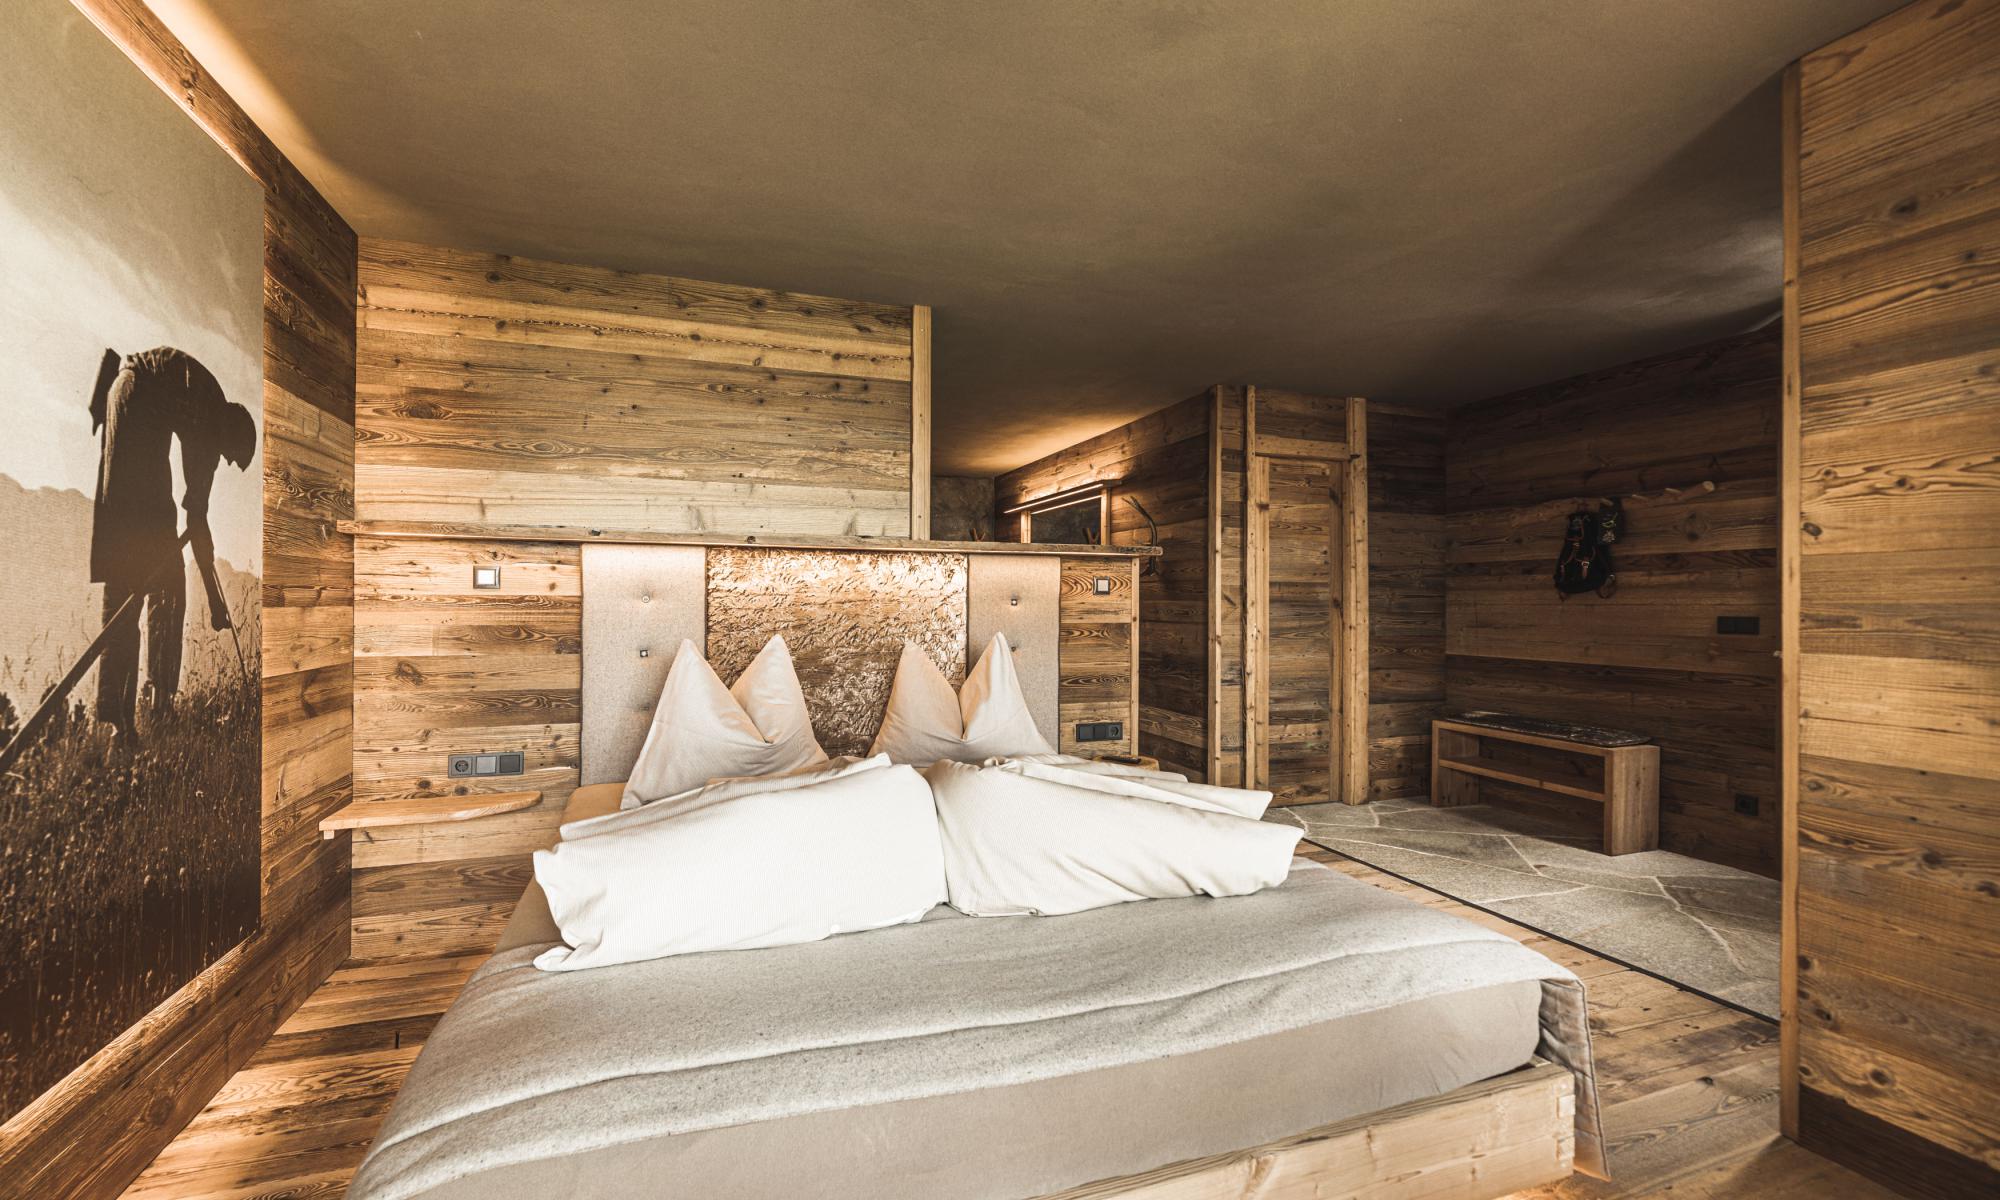 Sleep in a bedroom with romantic star-lit ceilings